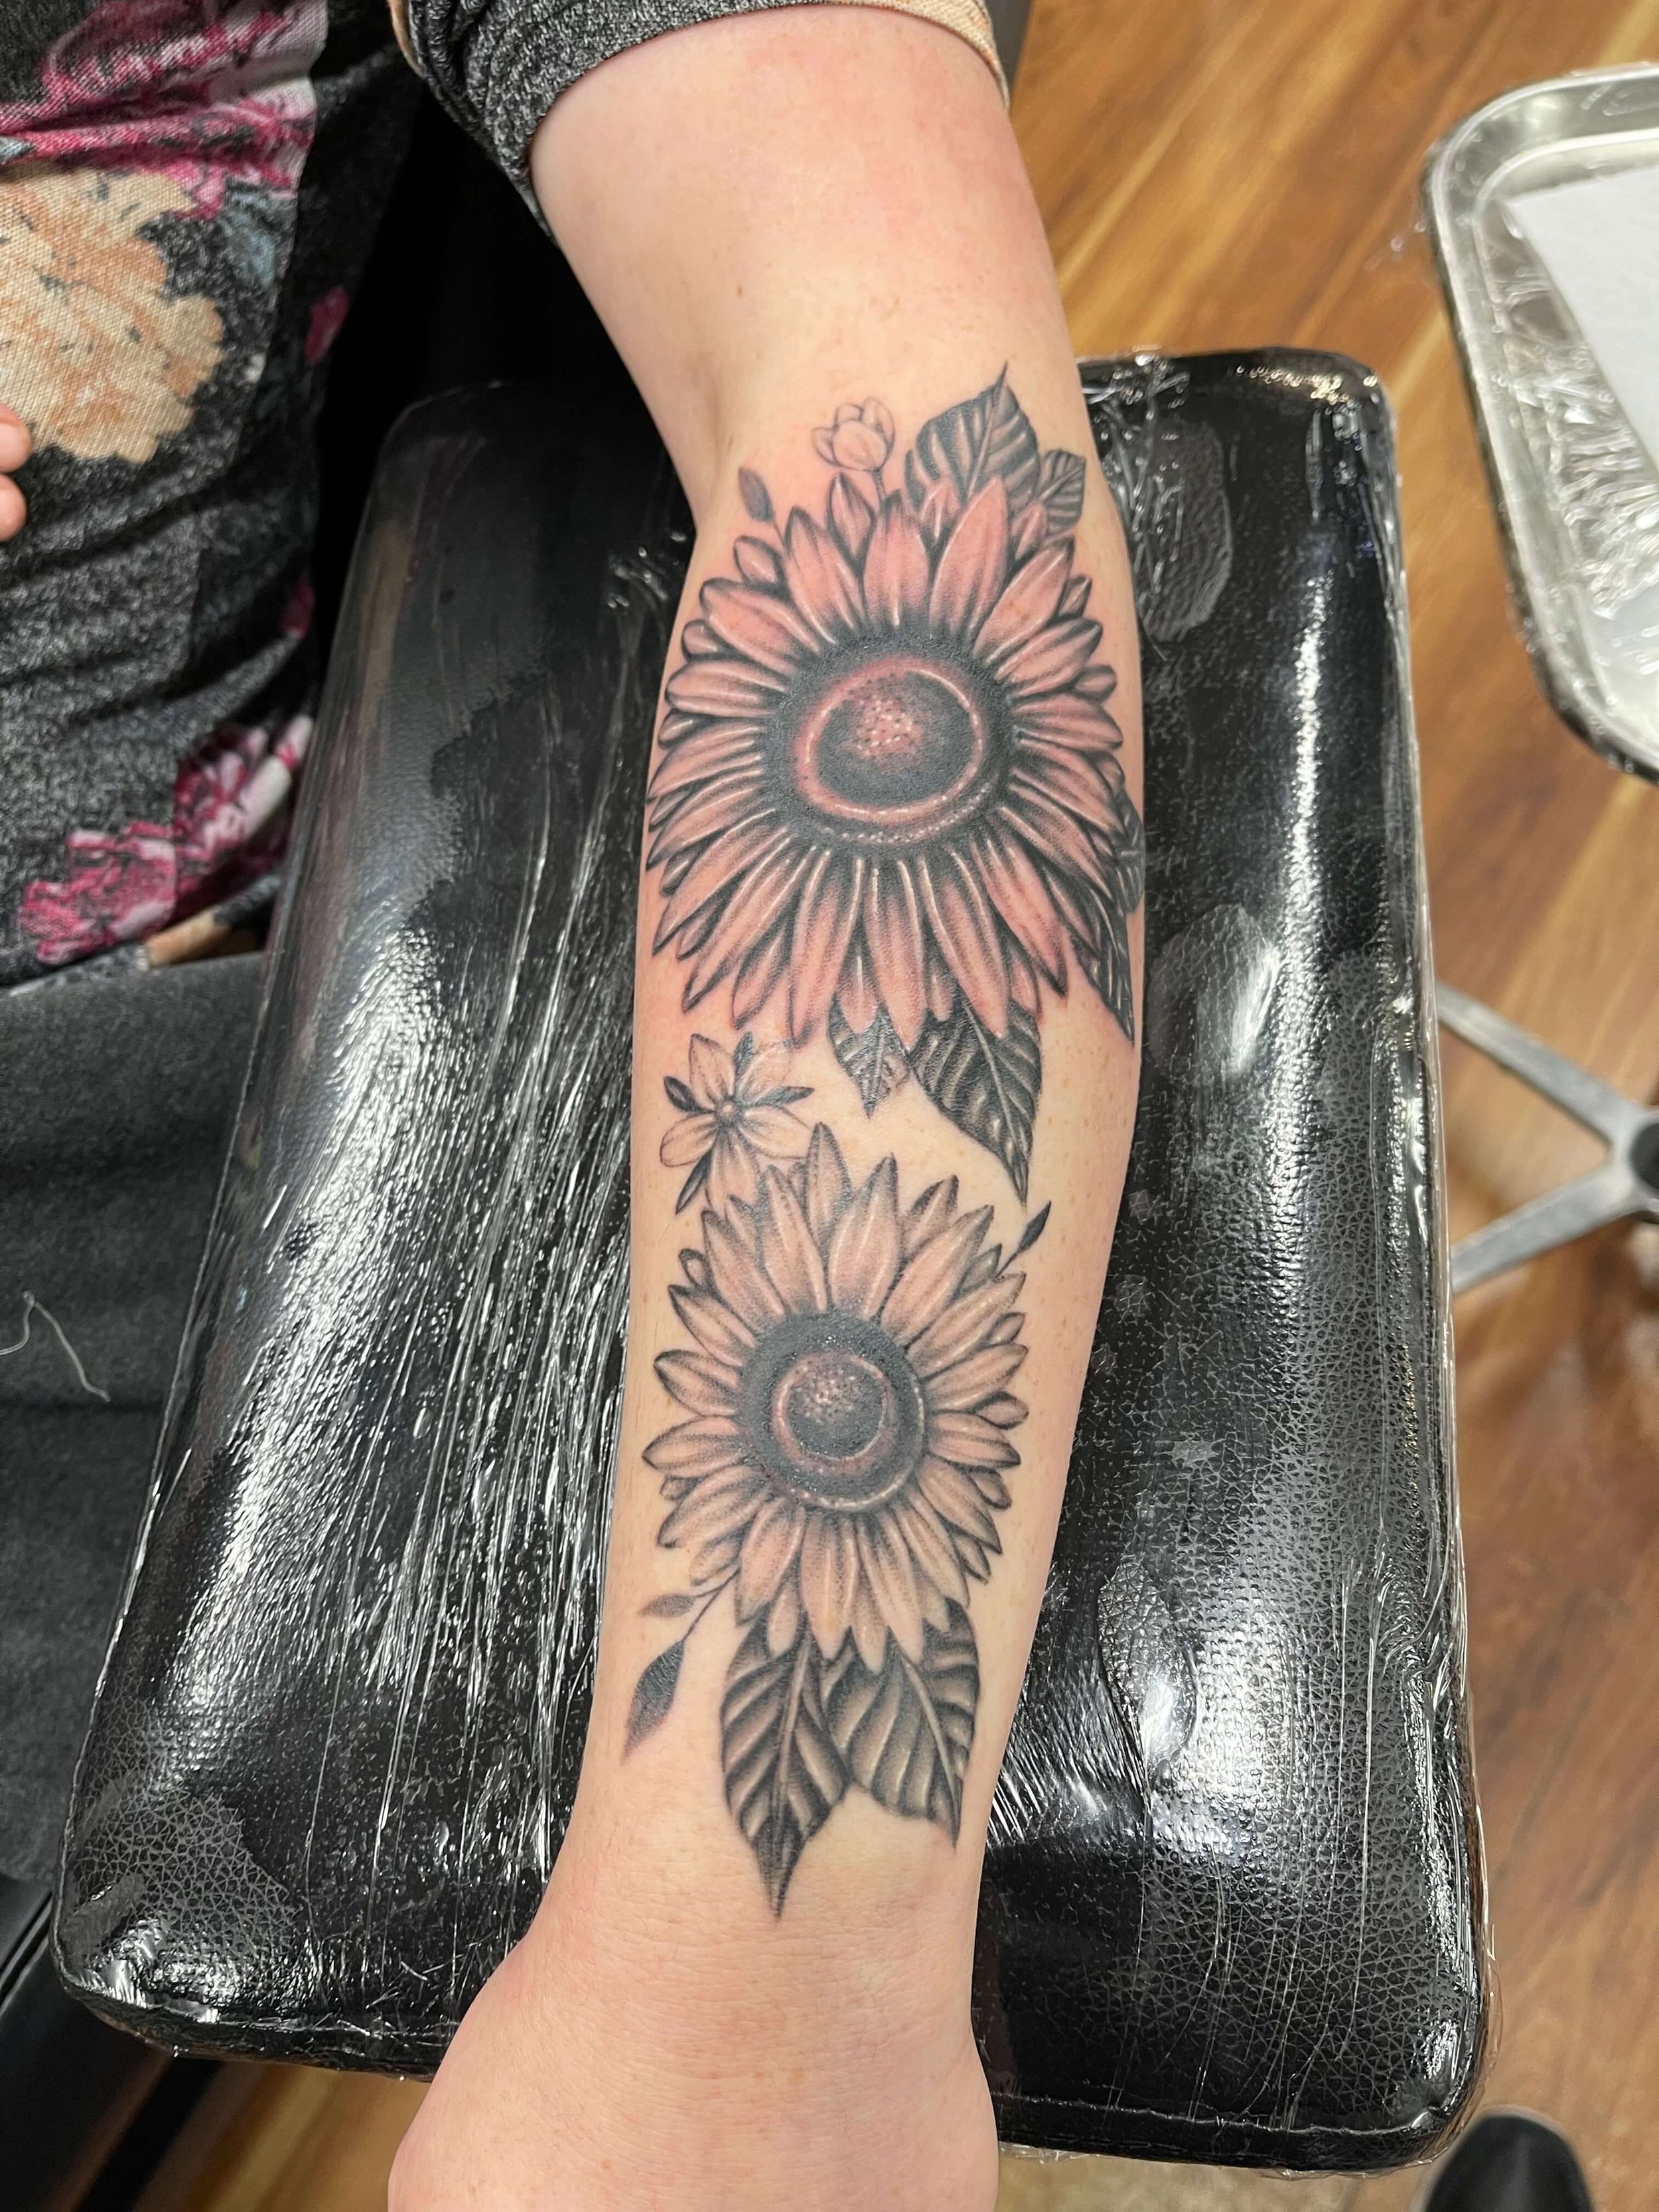 Sunflower Tattoo.jpg